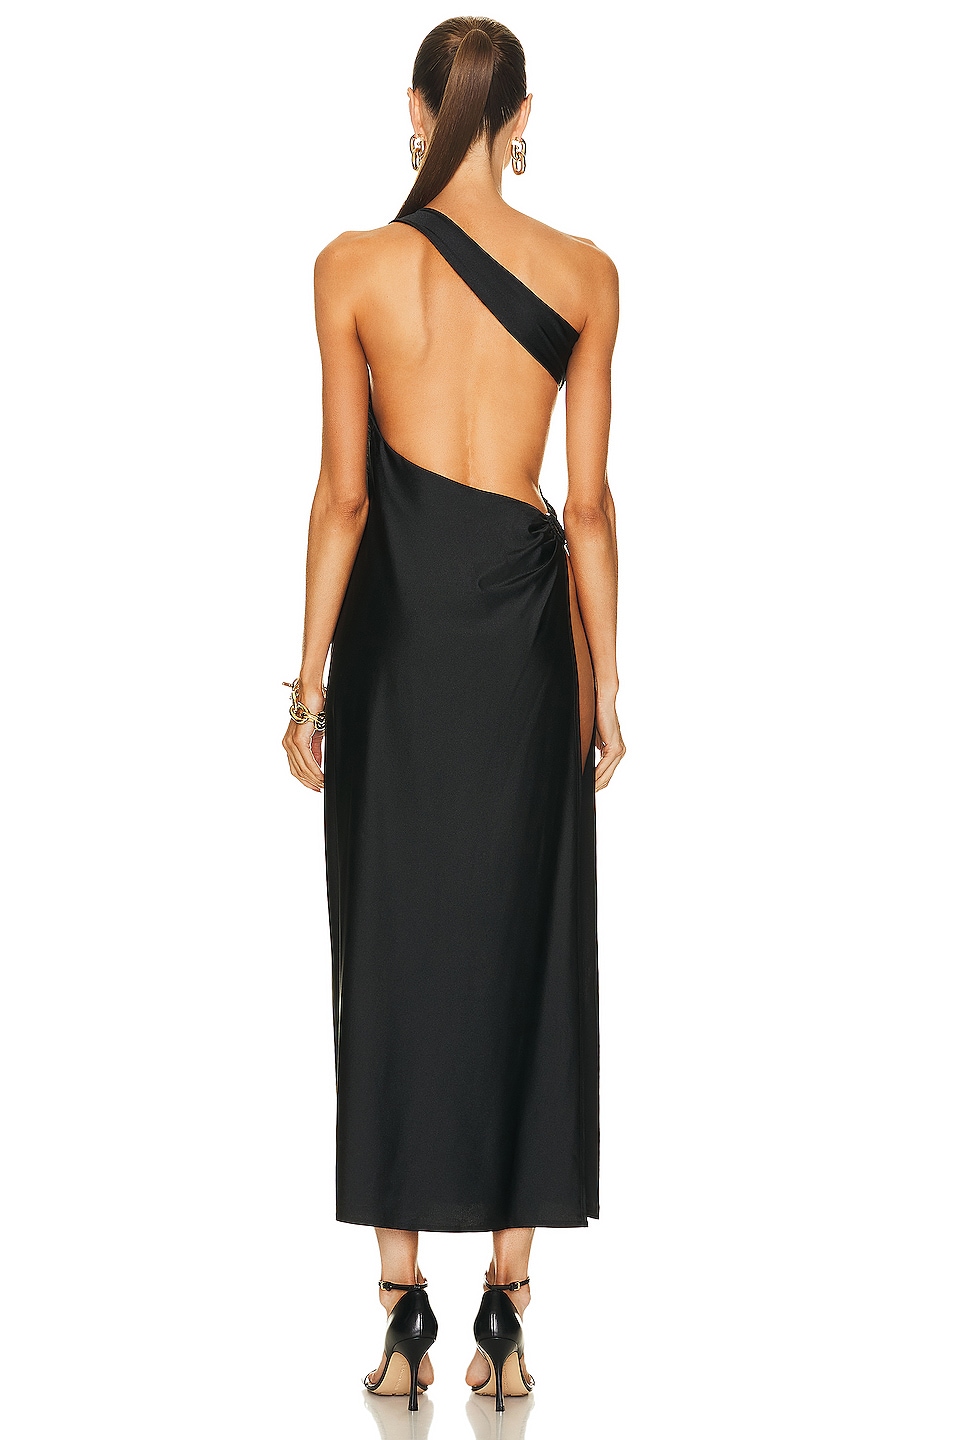 Shani Shemer Cleopatra Maxi Dress in Black | FWRD